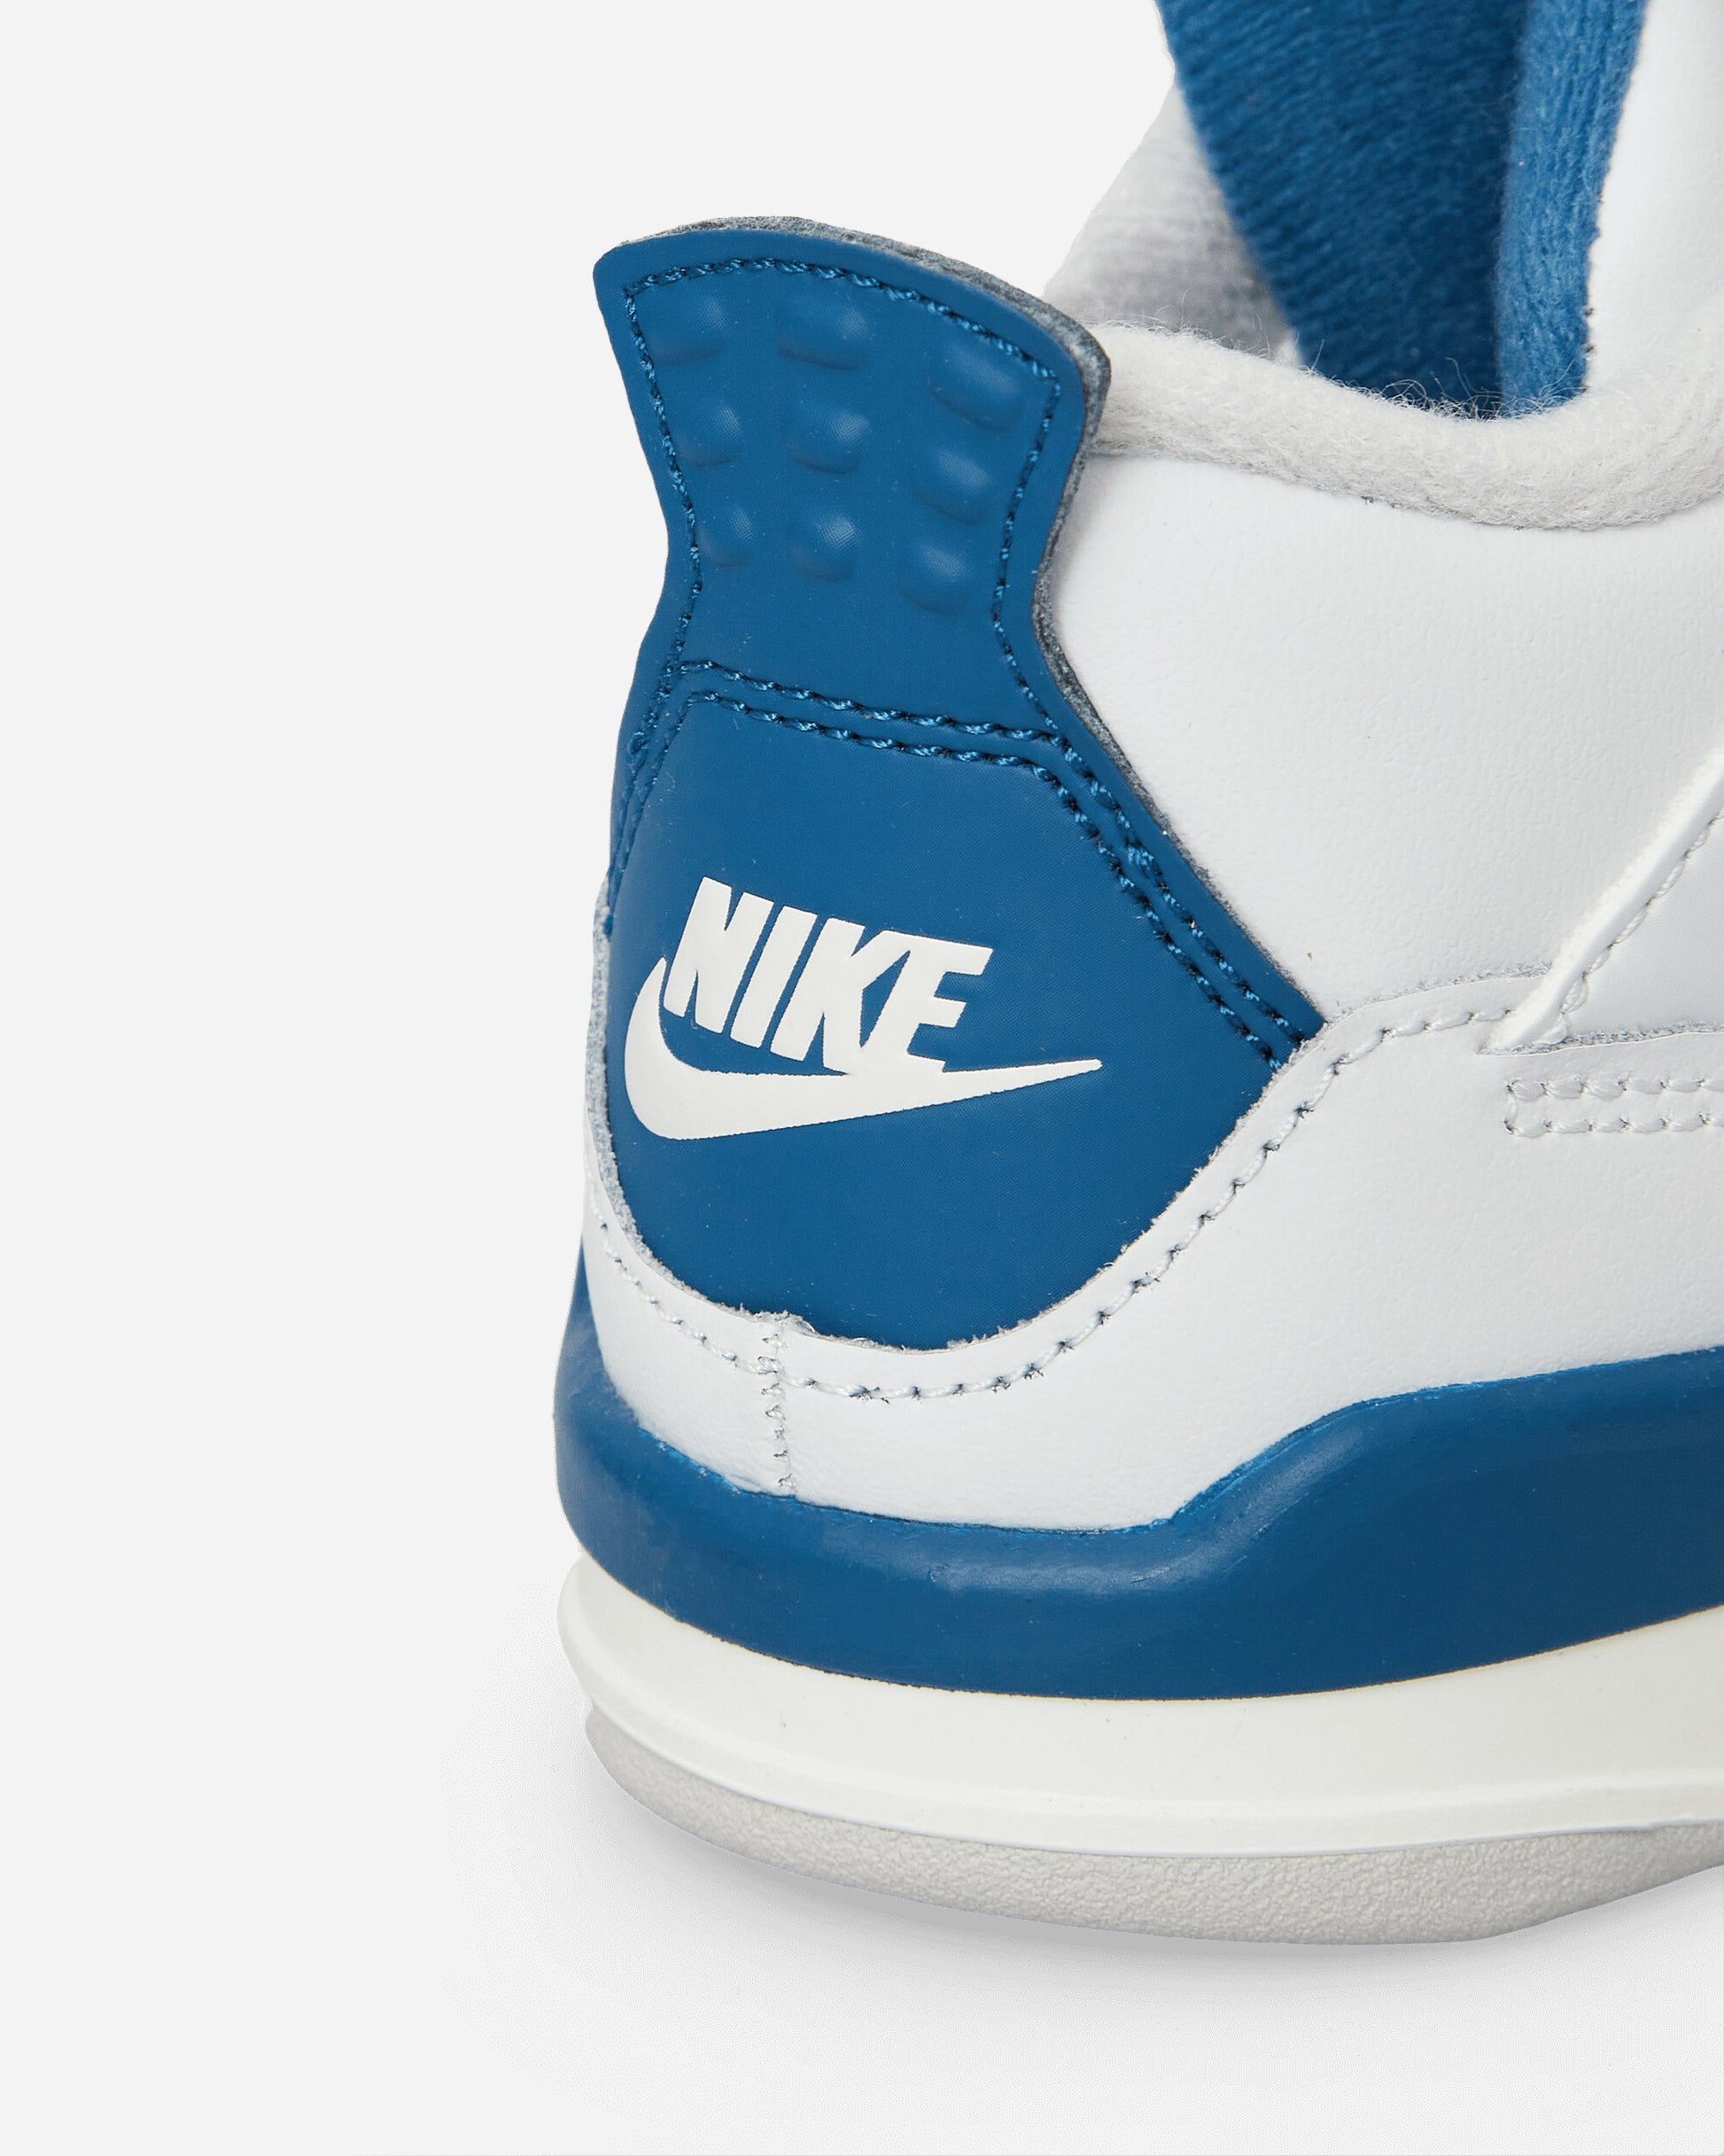 Nike Jordan Jordan 4 Retro (Td) Off White/Military Blue Sneakers High BQ7670-141